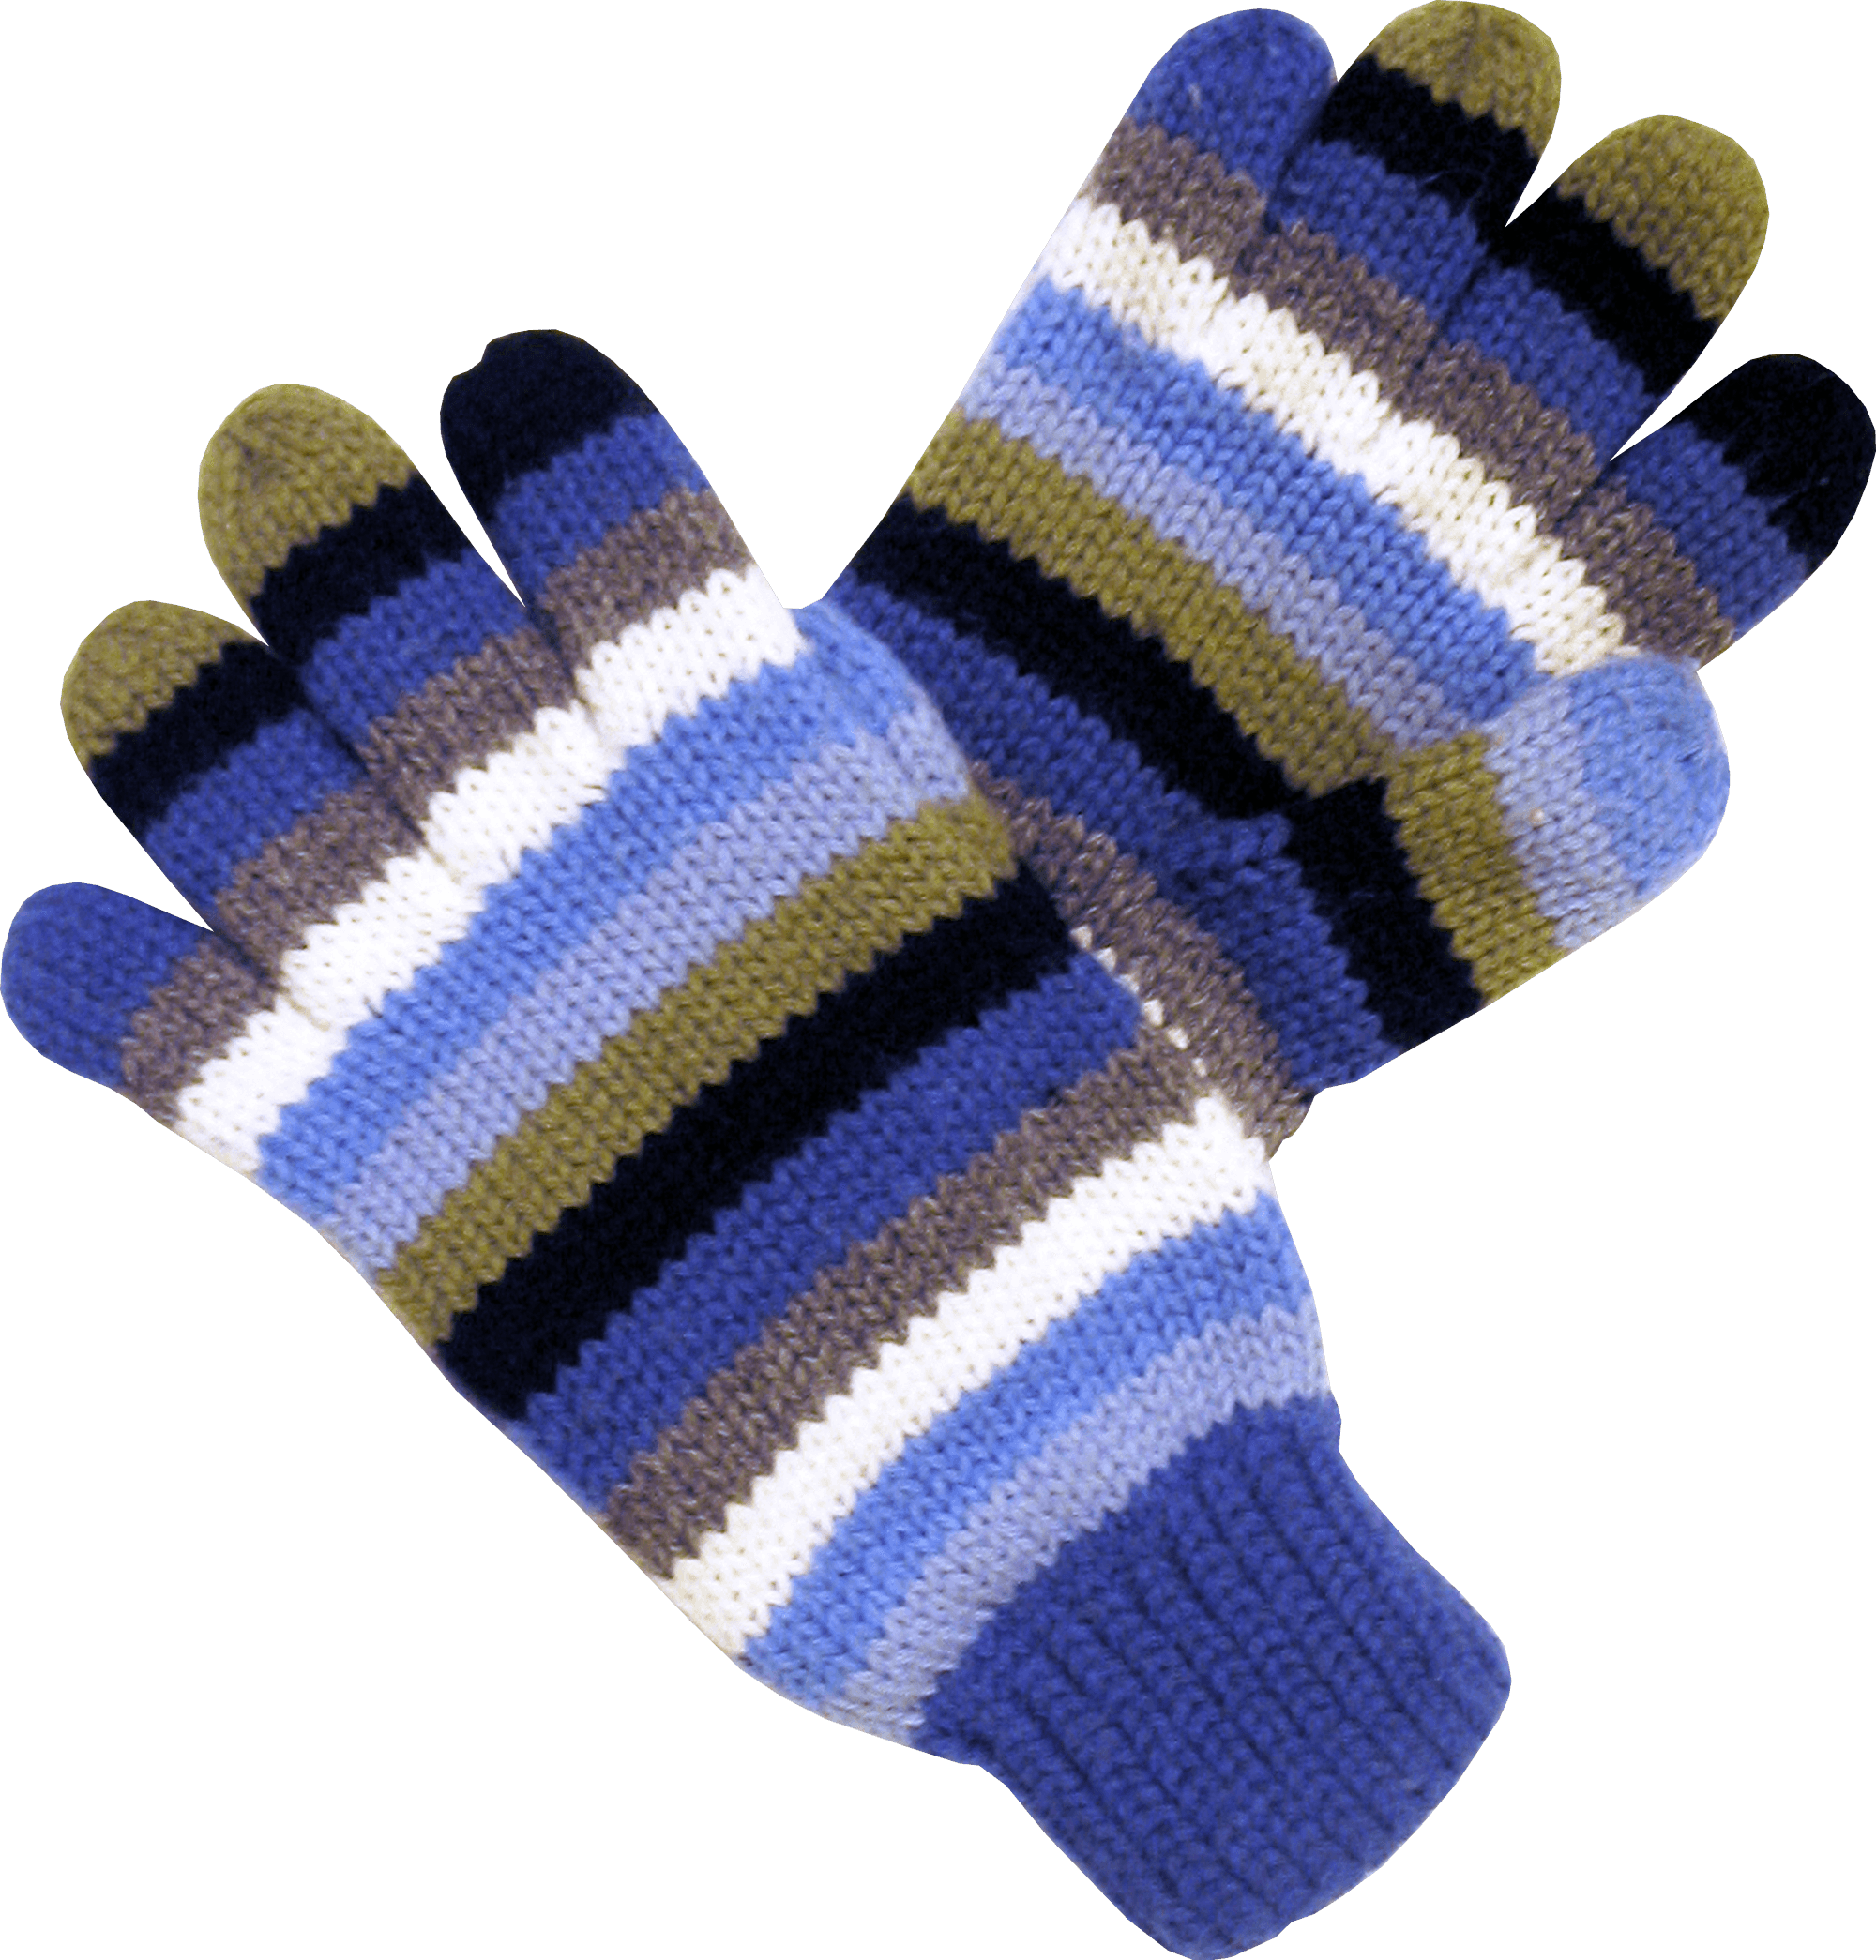 Winter Gloves Png Image PNG Image